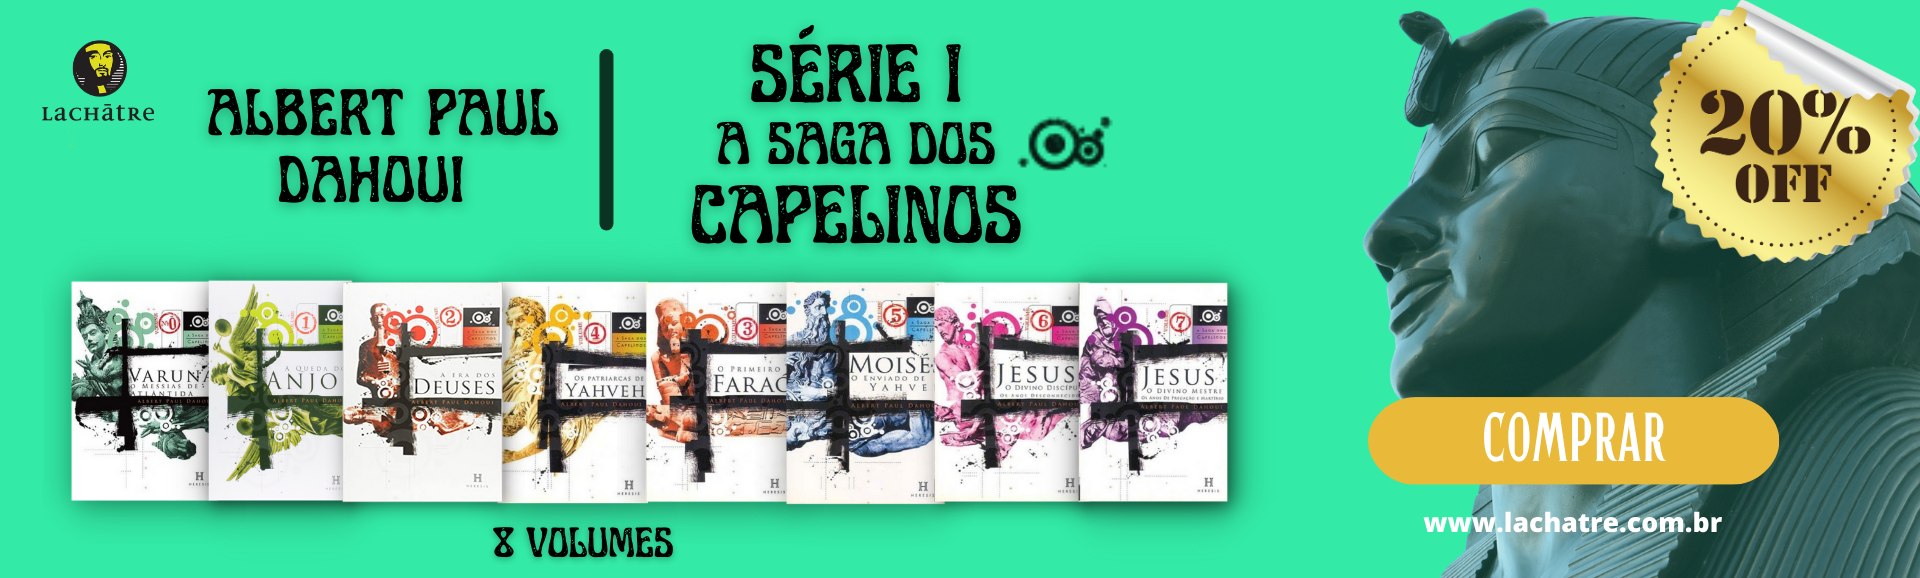 Combo A Saga dos Capelinos - série I